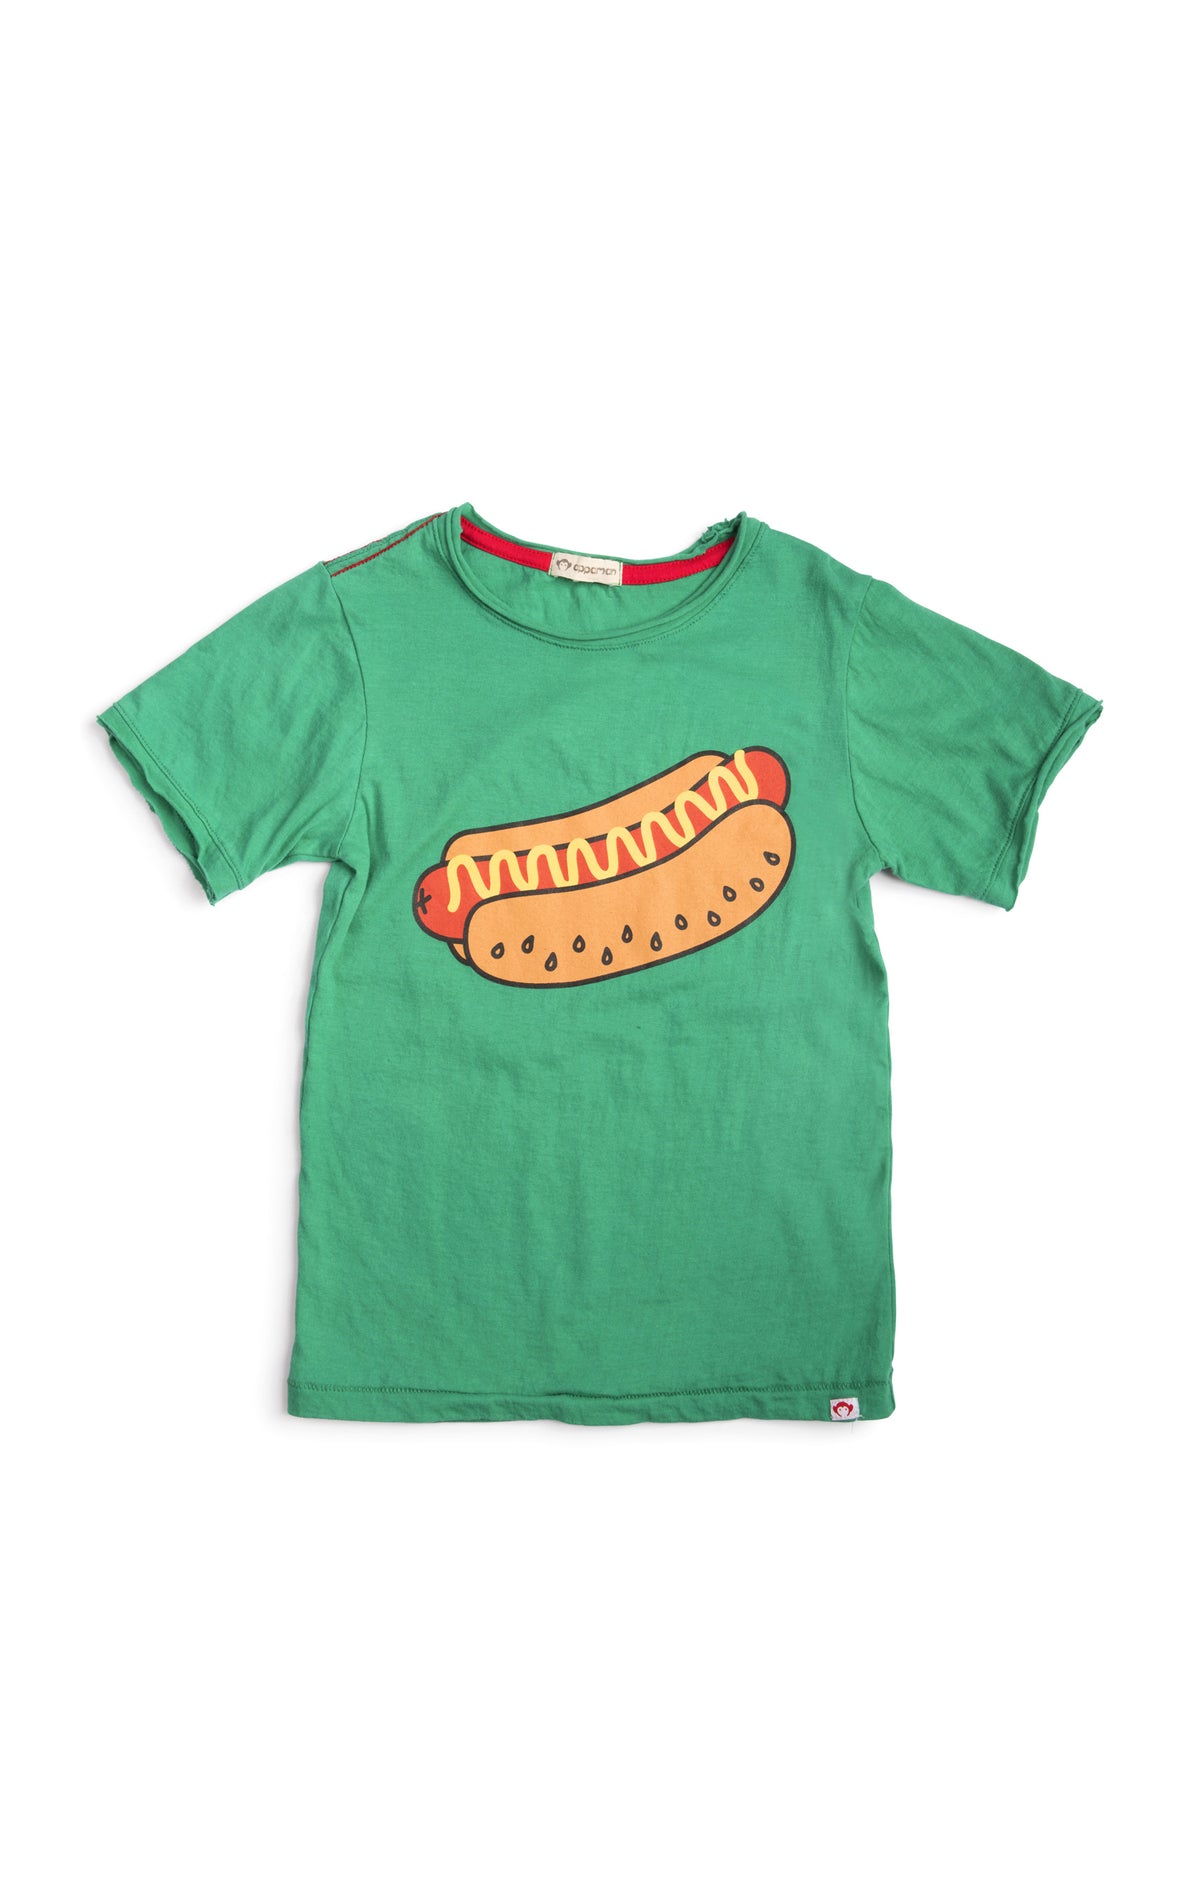 Boys "Hot Dog" Short Sleeved Graphic Tee